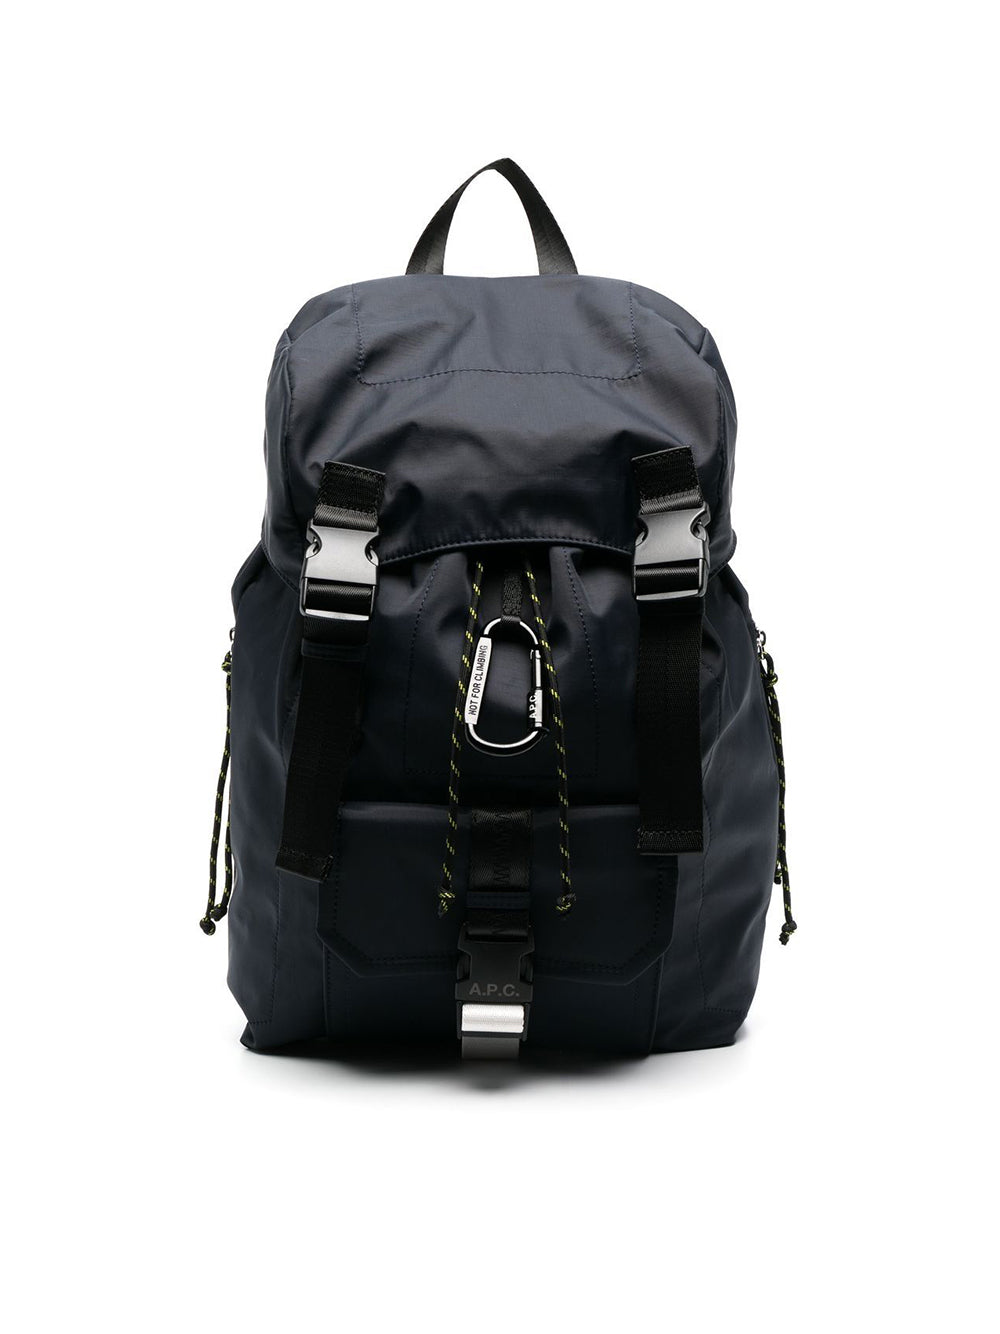 Zaino Reck Backpack